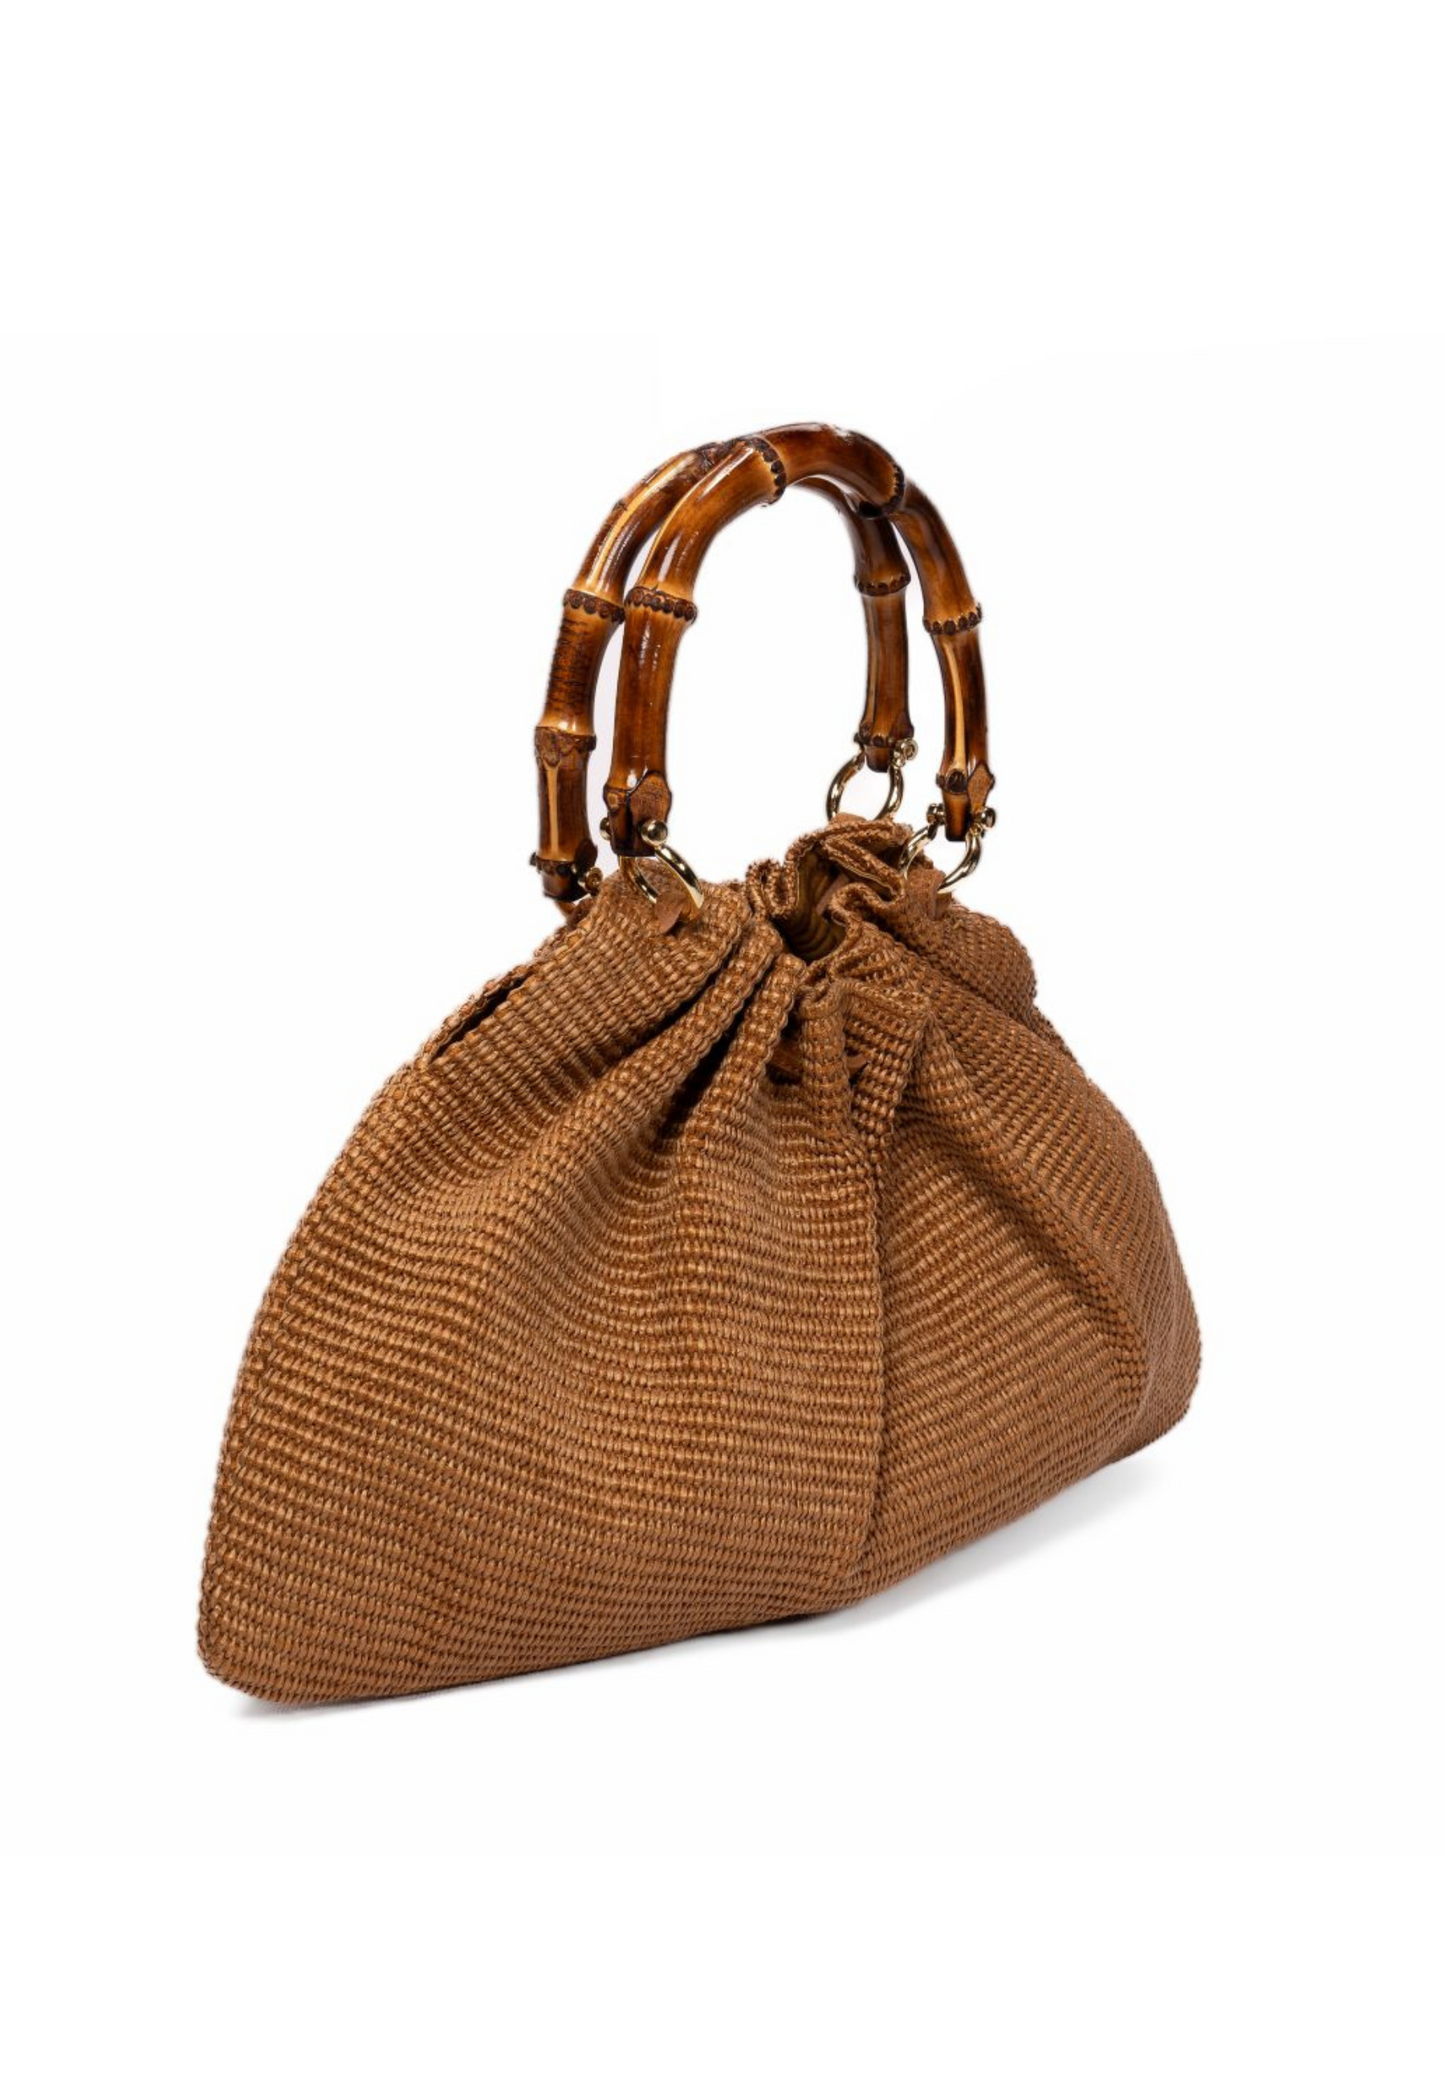 raffia handbags, bamboo handle bags, tobacco brown bags, Italian crafted handbags, versatile slouchy bags